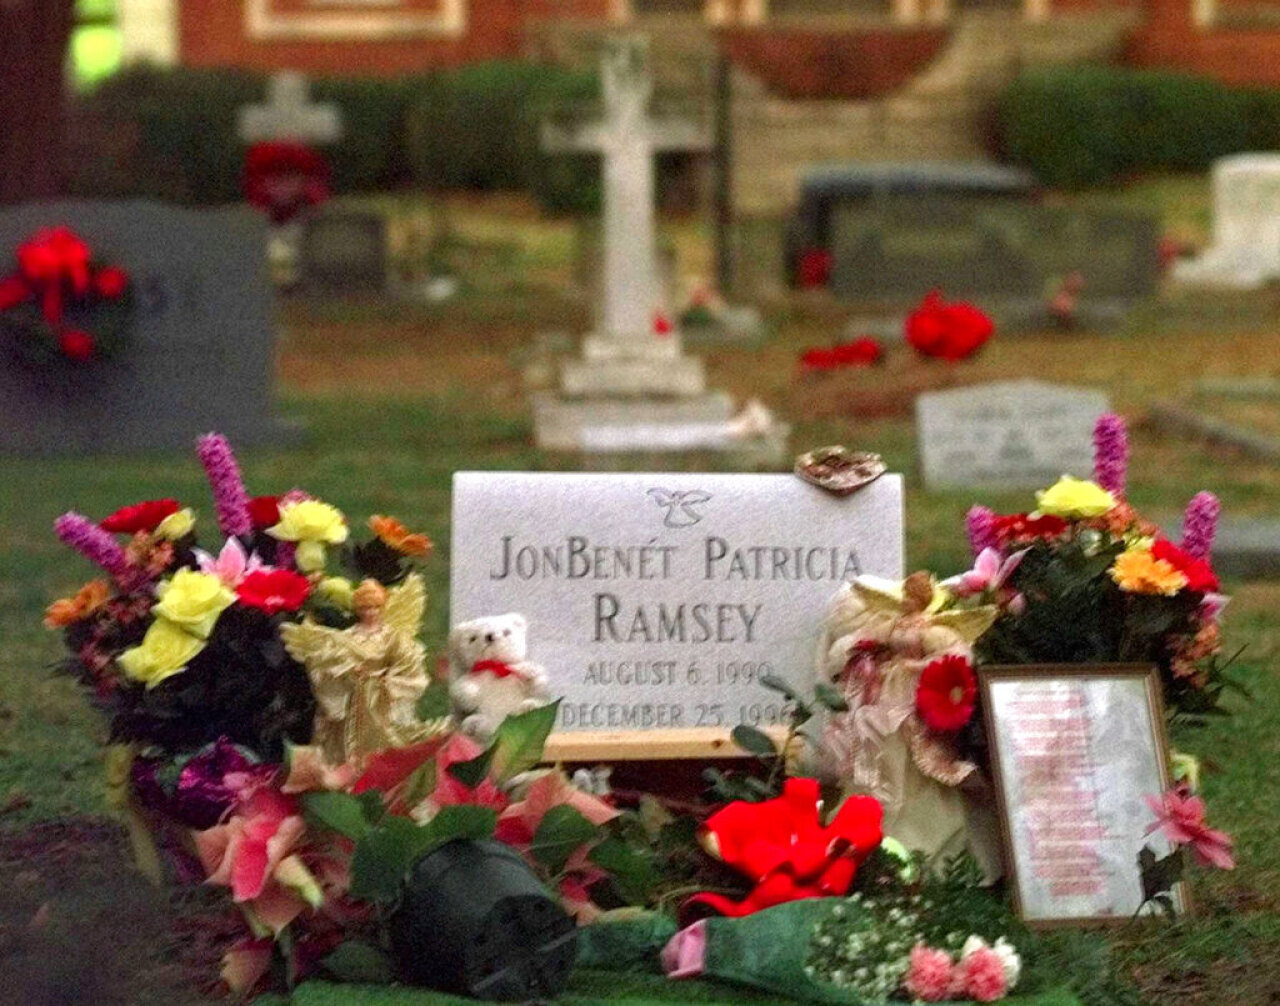 [IMAGE] Renewed push to solve JonBenét Ramsey murder